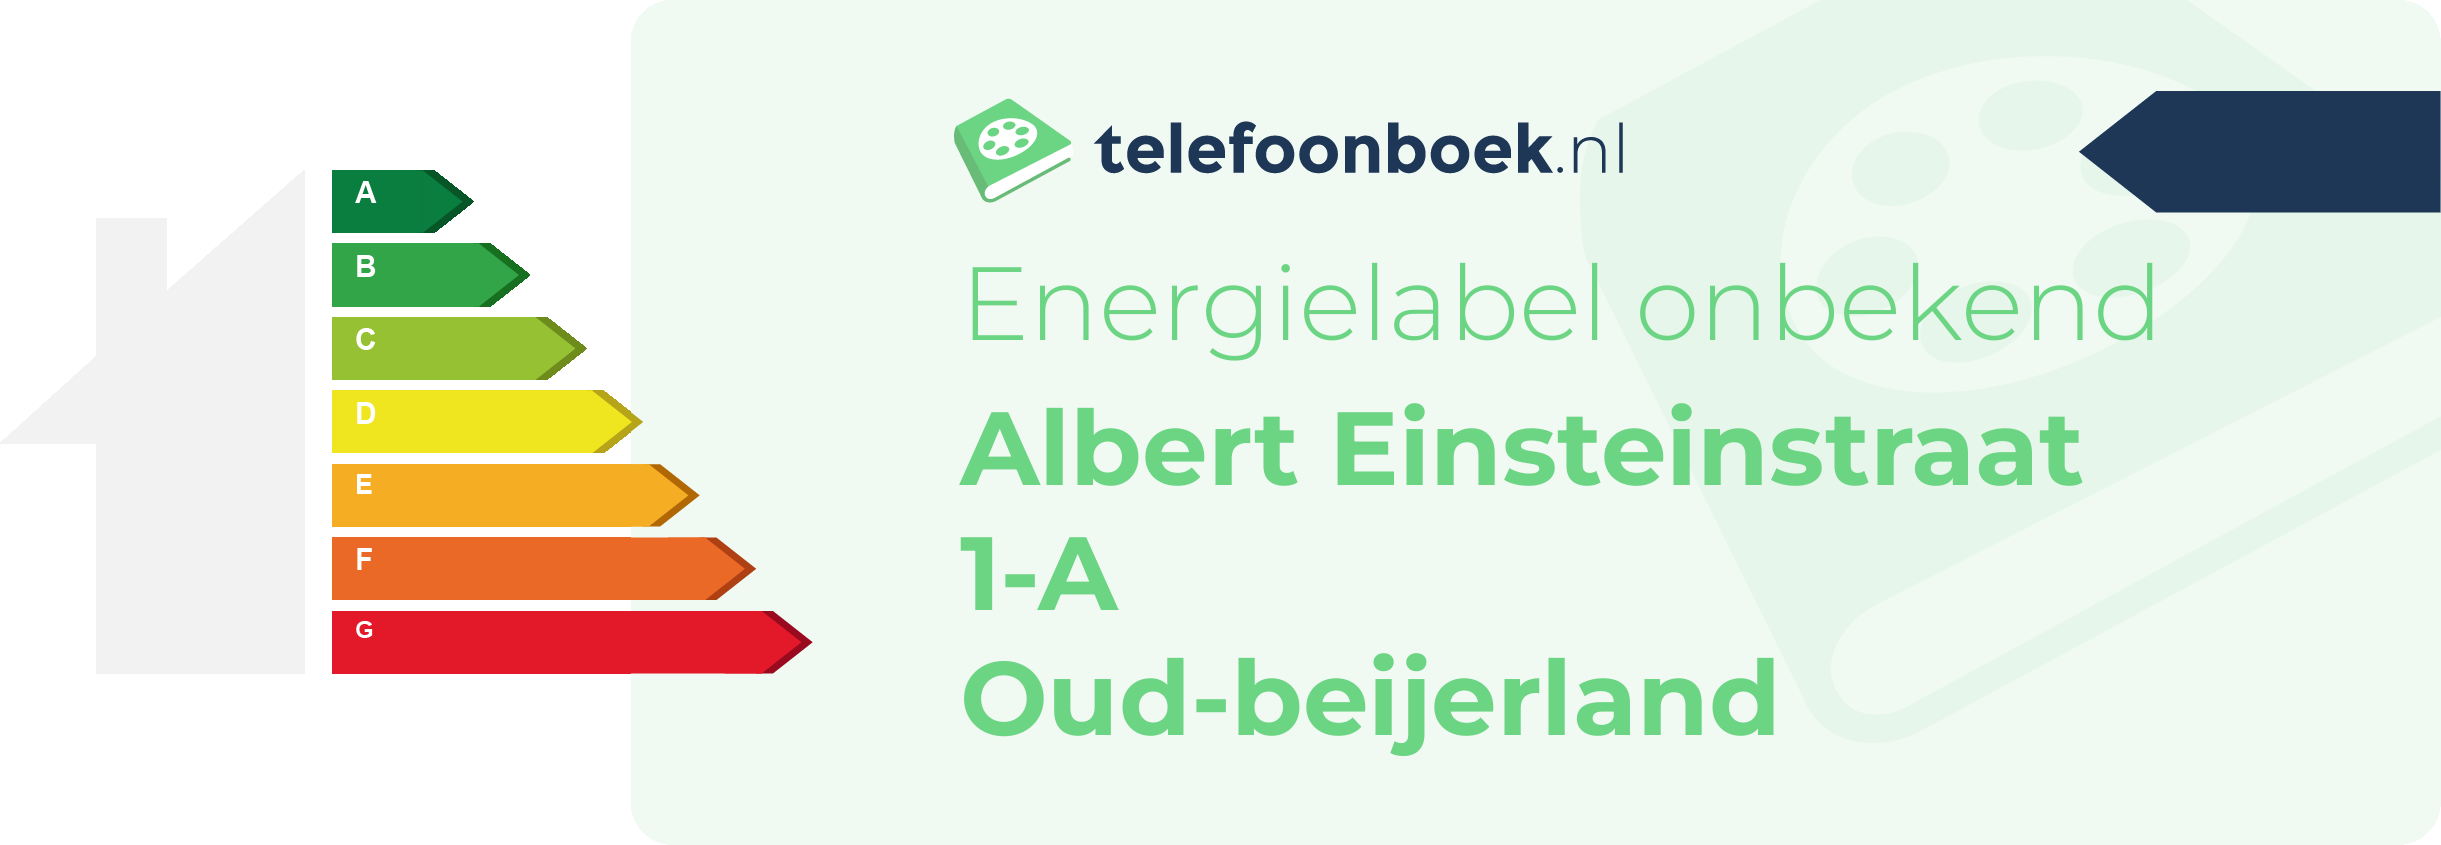 Energielabel Albert Einsteinstraat 1-A Oud-Beijerland